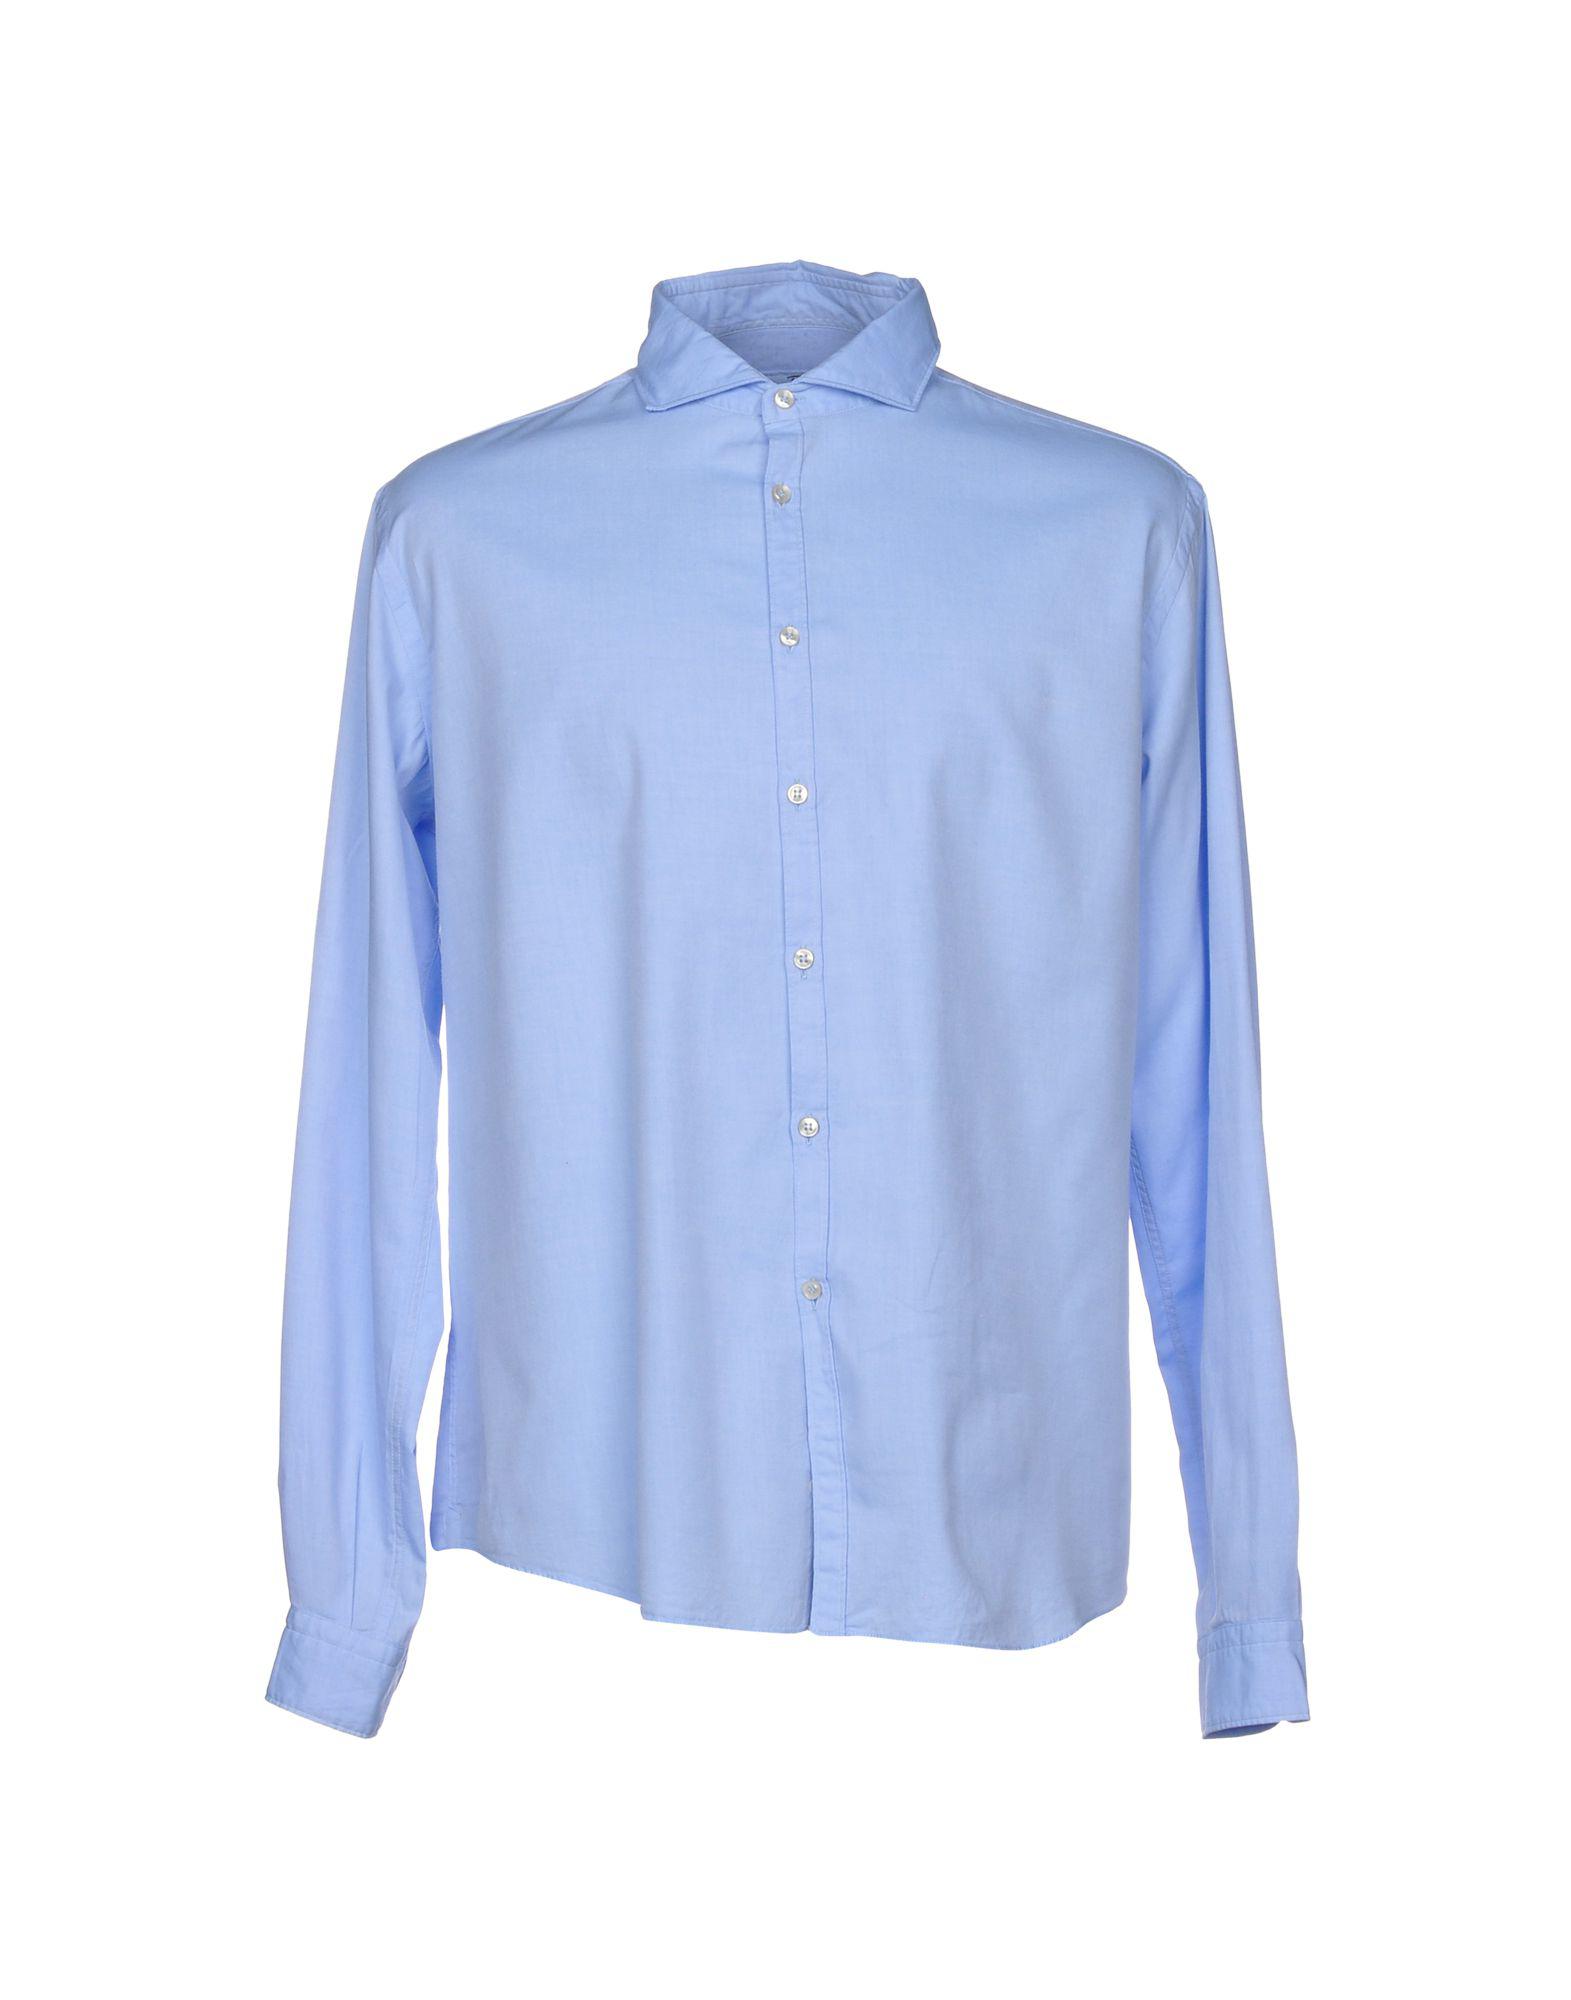 Michael Coal Cotton Shirt in Sky Blue (Blue) for Men - Lyst